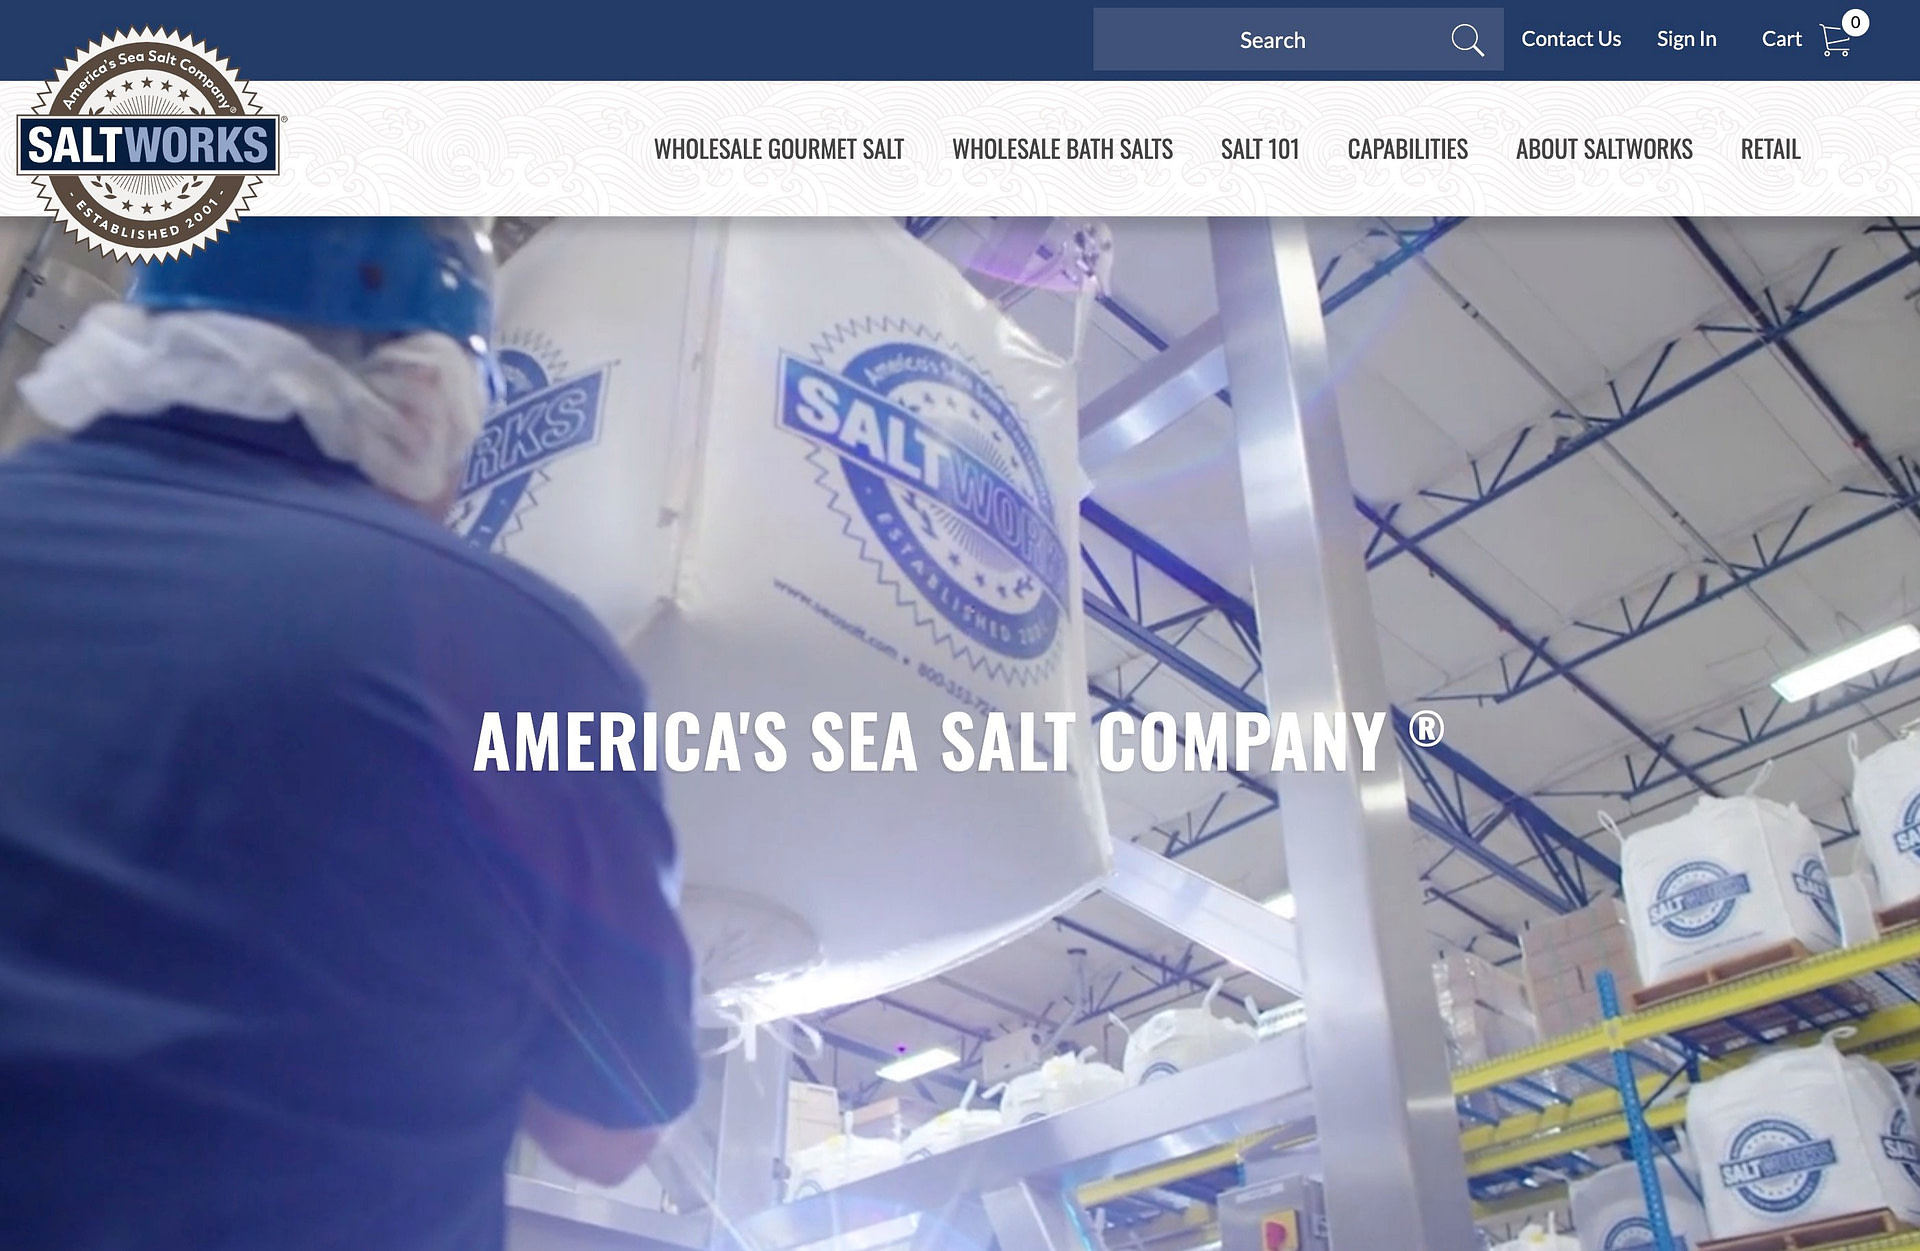 The SaltWorks website runs on an open source ecommerce platform.